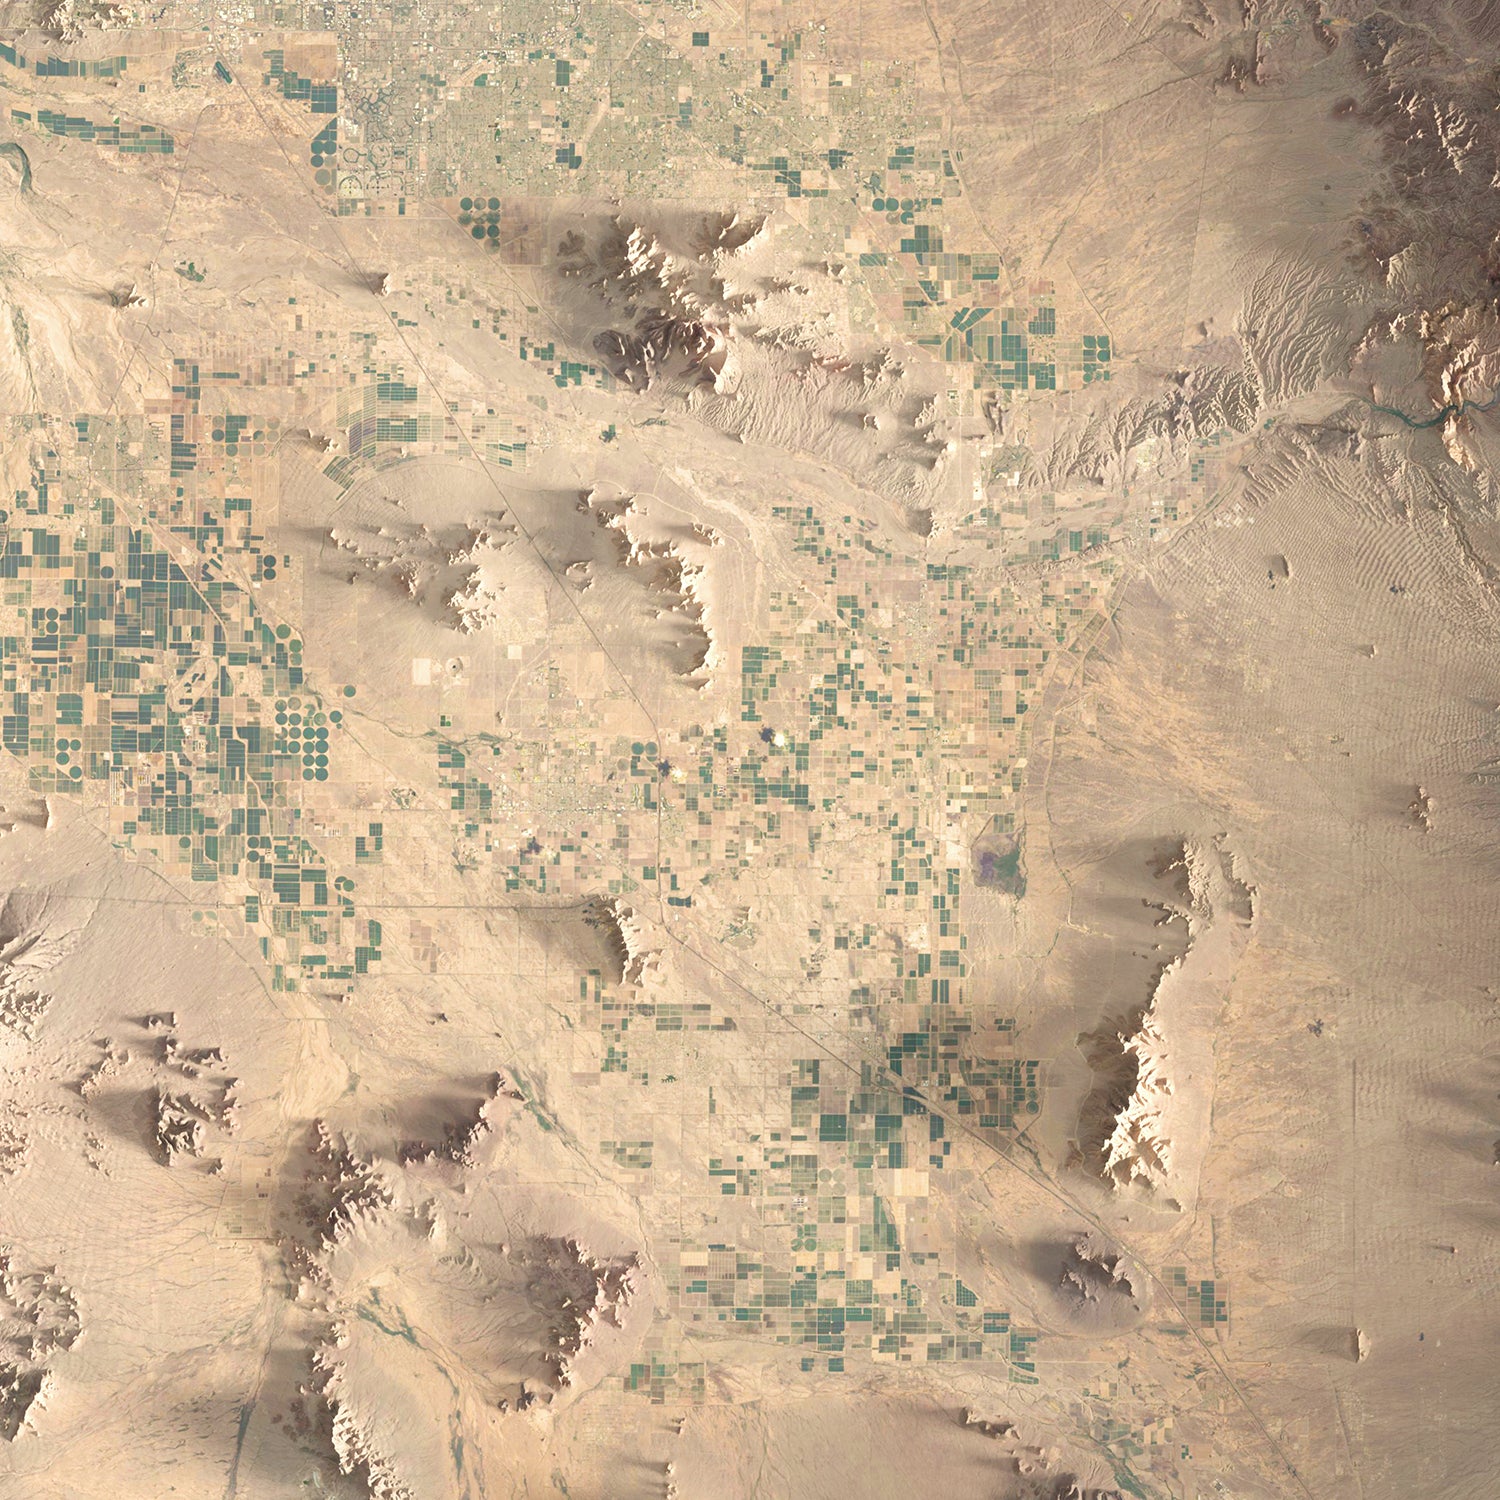 Phoenix and Tucson - Satellite Imagery